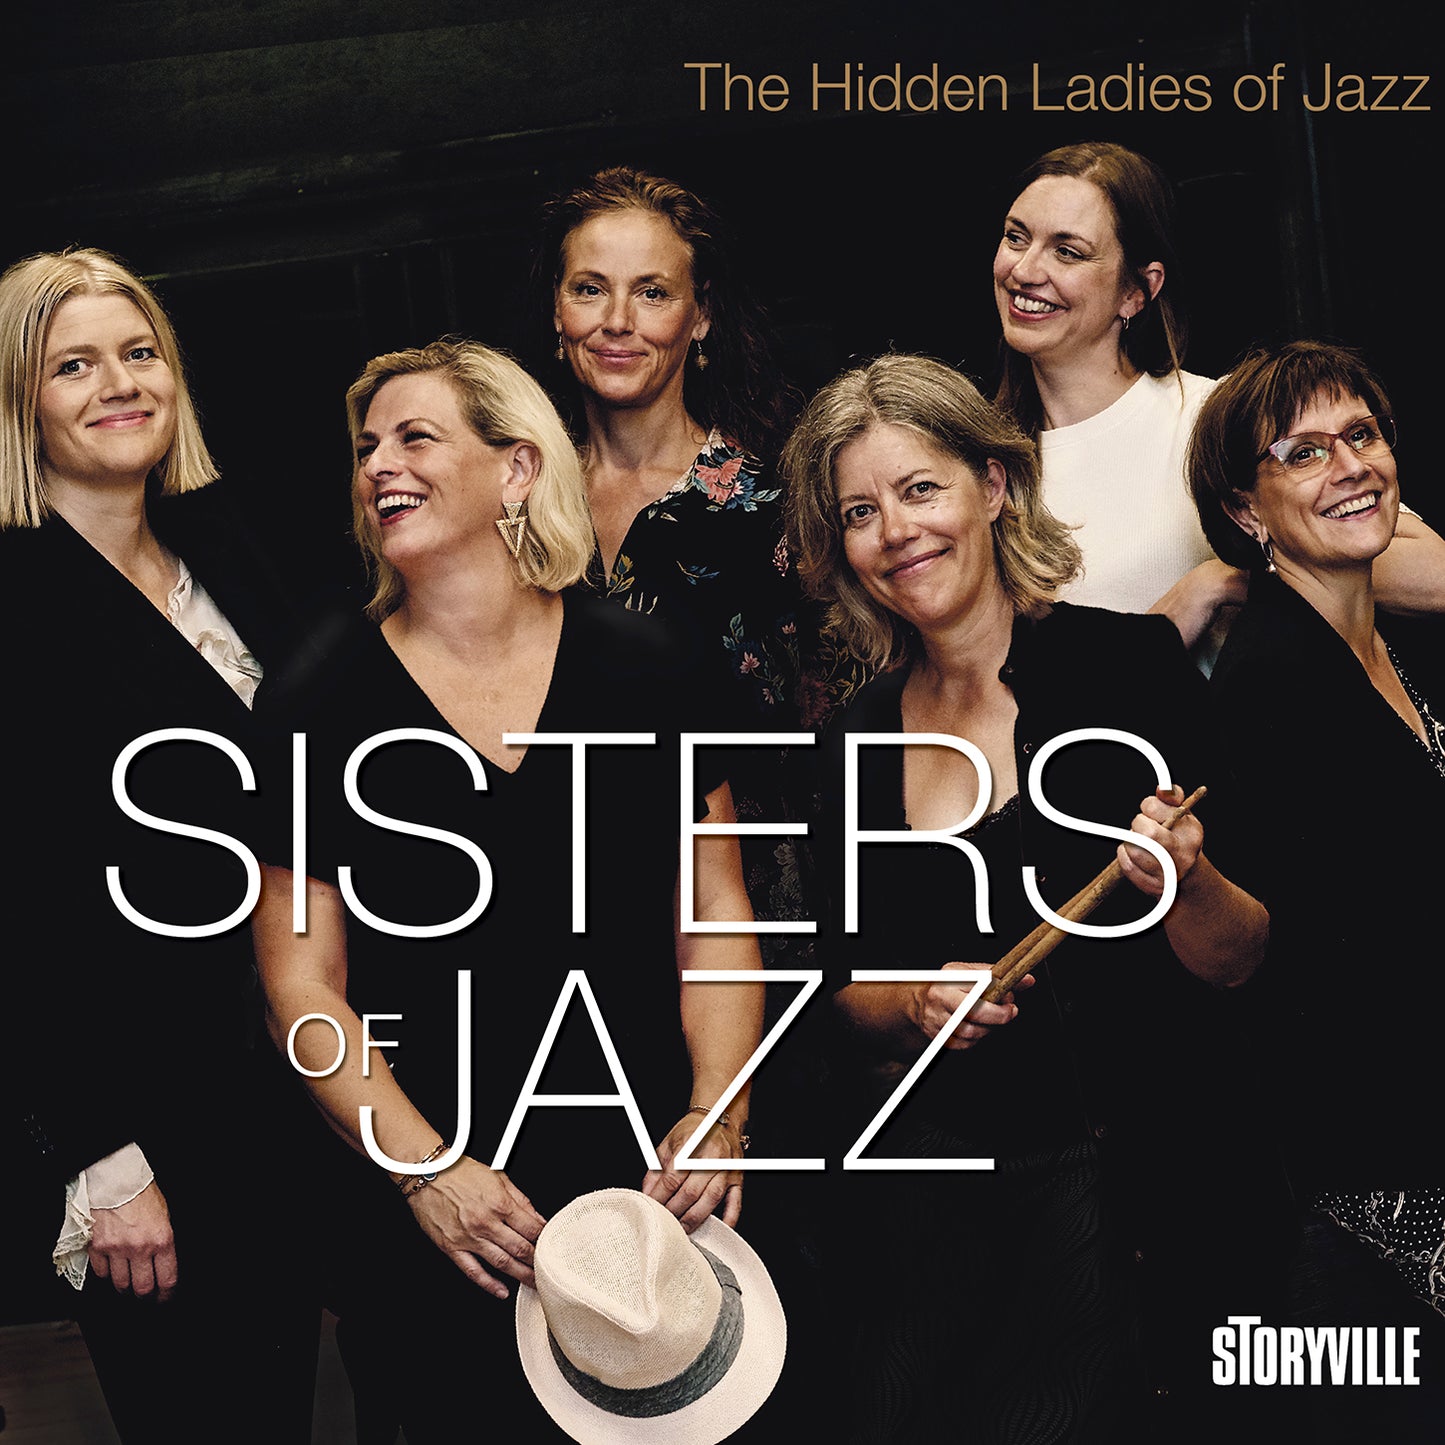 The Hidden Ladies of Jazz / Sisters of Jazz